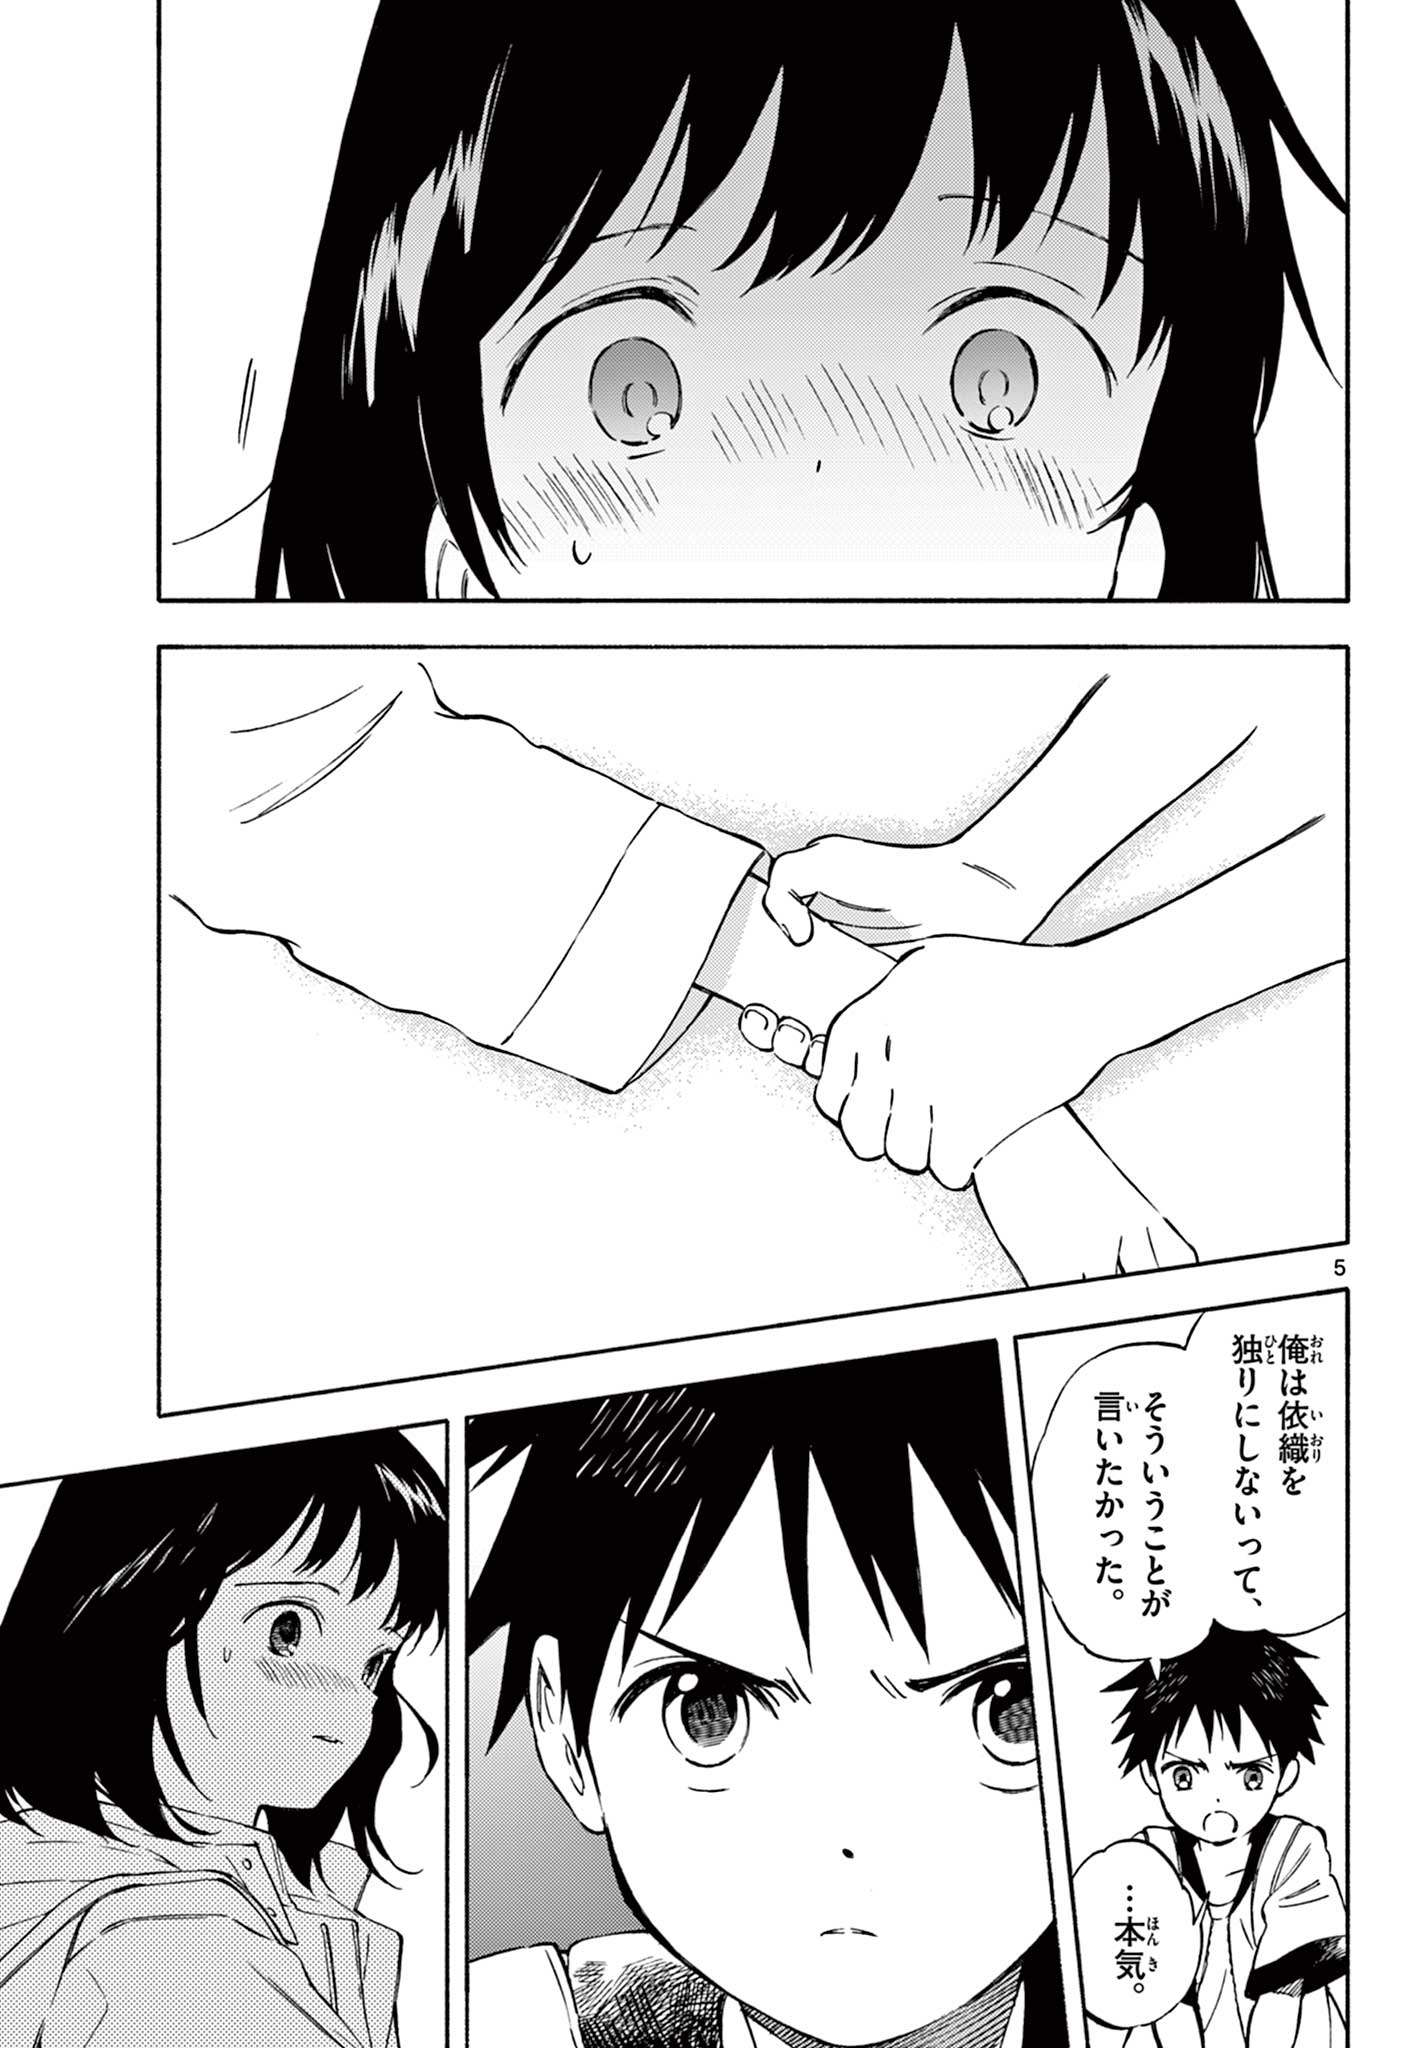 Nami no Shijima no Horizont - Chapter 14.1 - Page 5